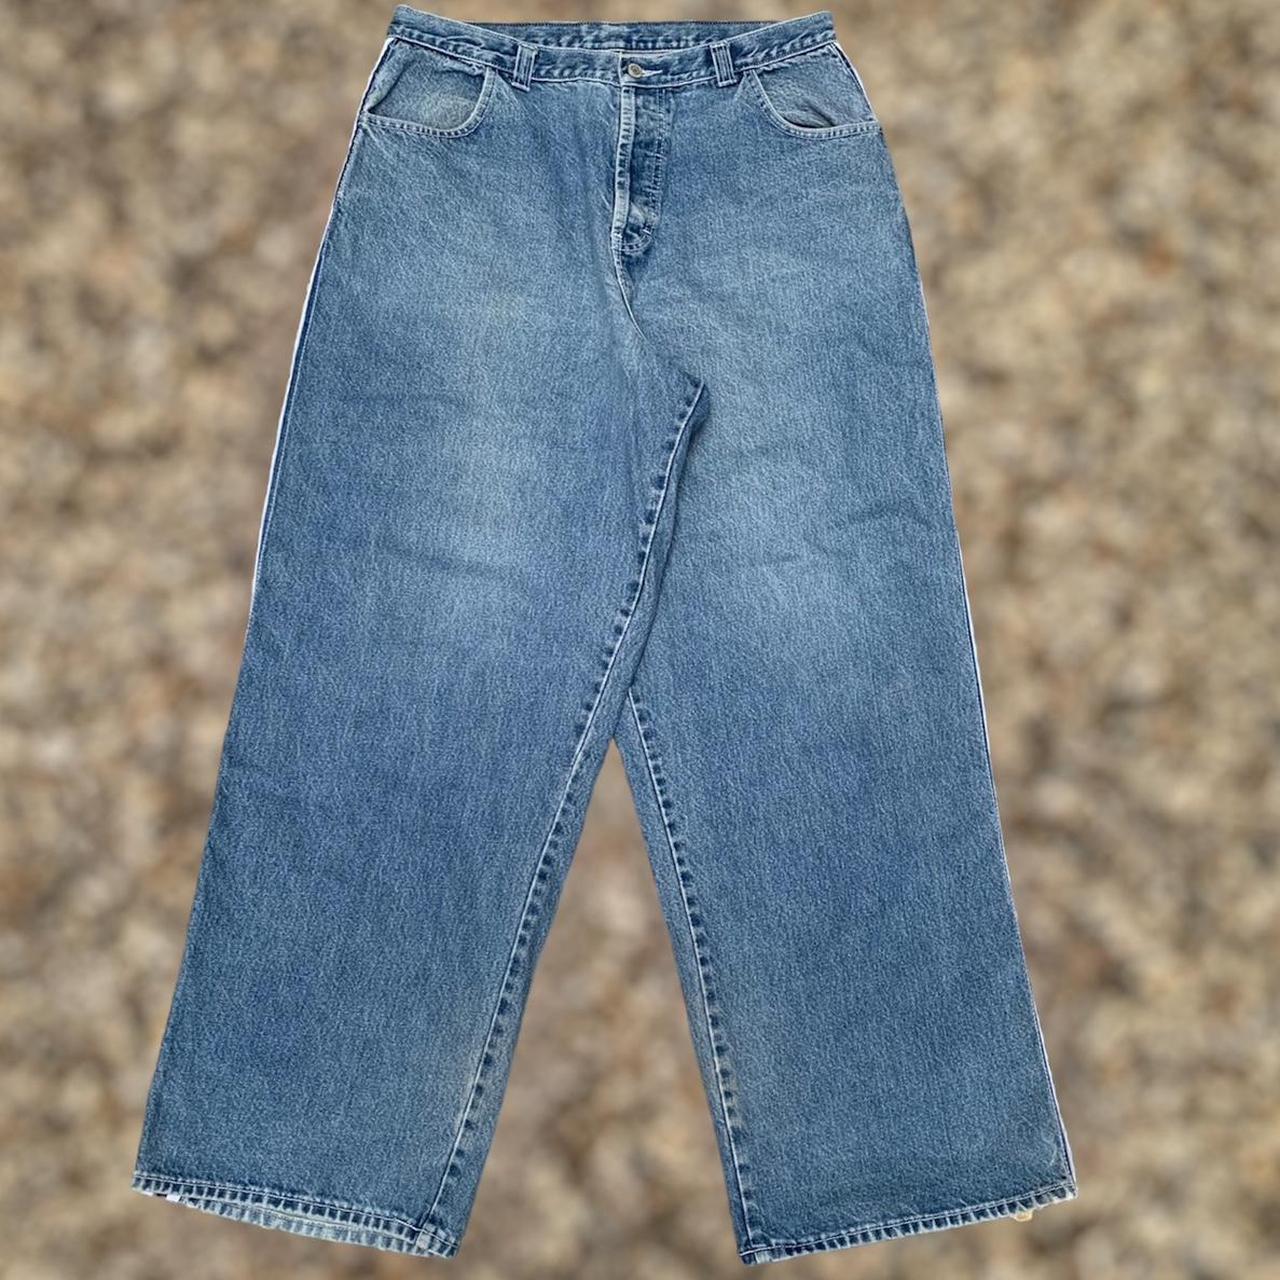 Huge side stripe bernys baggy jeans 34x32 shown on... - Depop